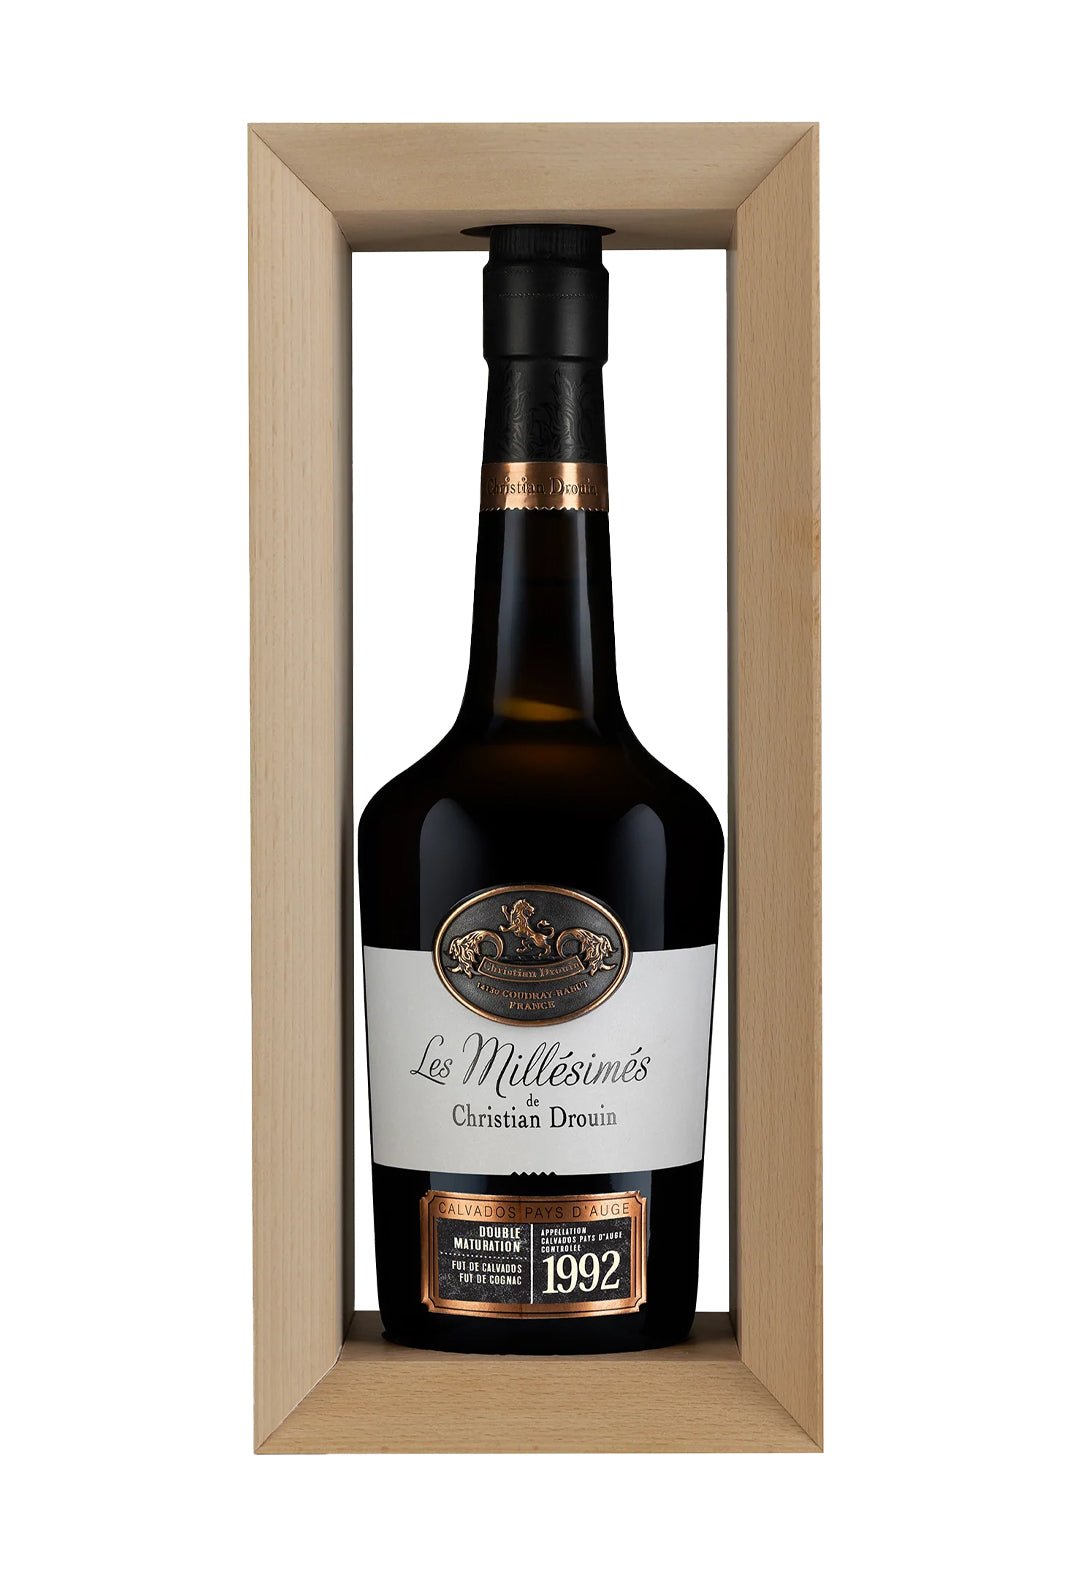 Christian Drouin 1992 Calvados Pays d'Auge 42% 700ml | Liquor & Spirits | Shop online at Spirits of France